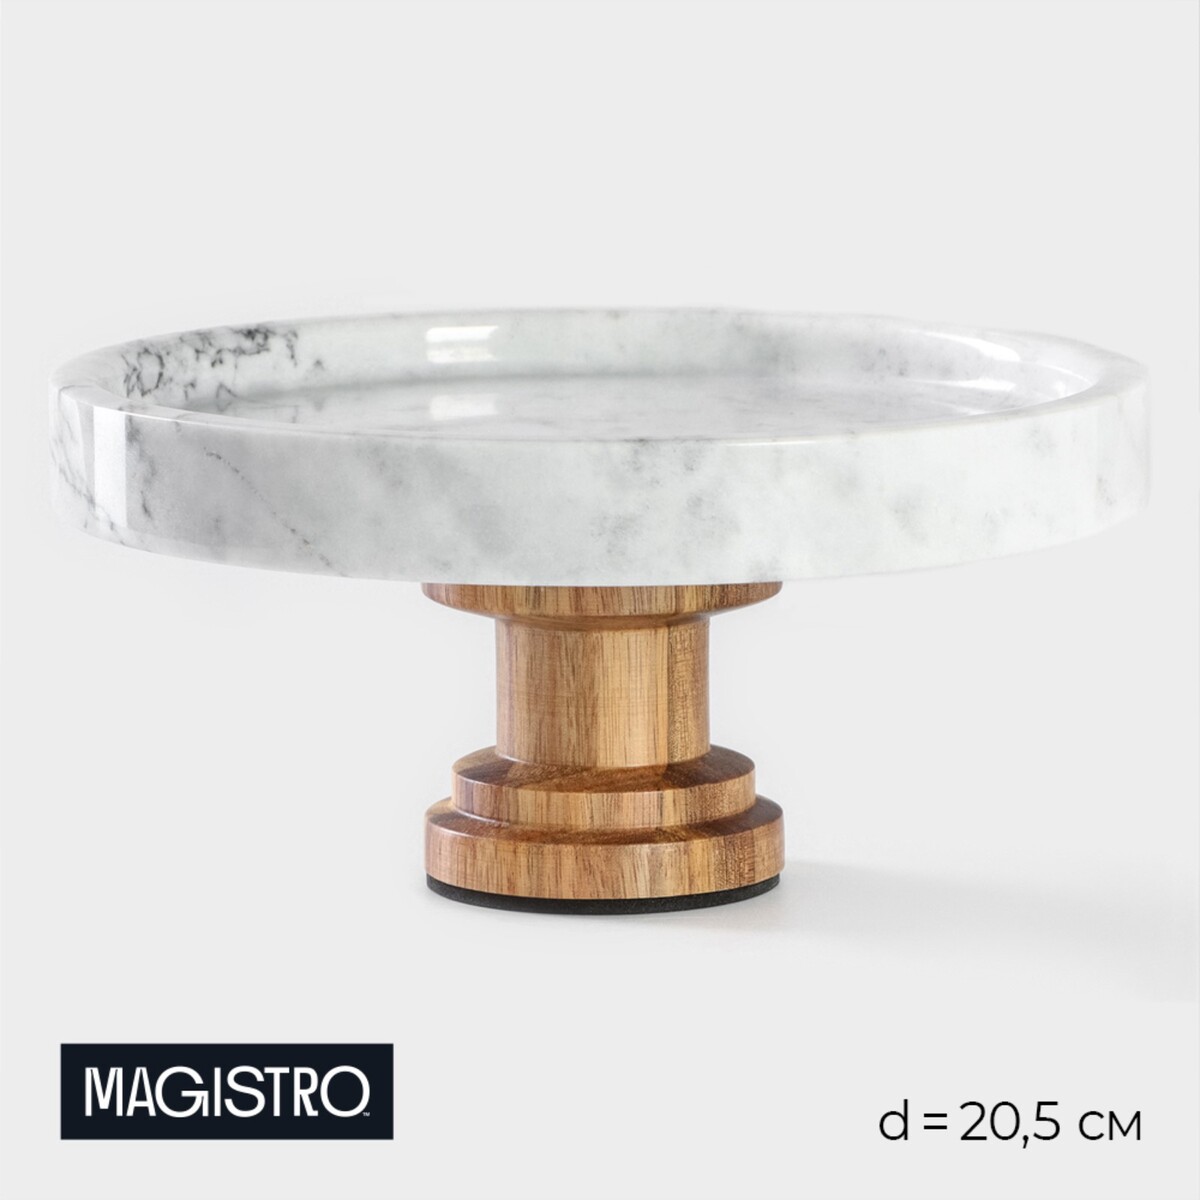 Подставка для торта magistro forest dream, d=20,5 см, акация, мрамор подставка для торта magistro valley d 40 см